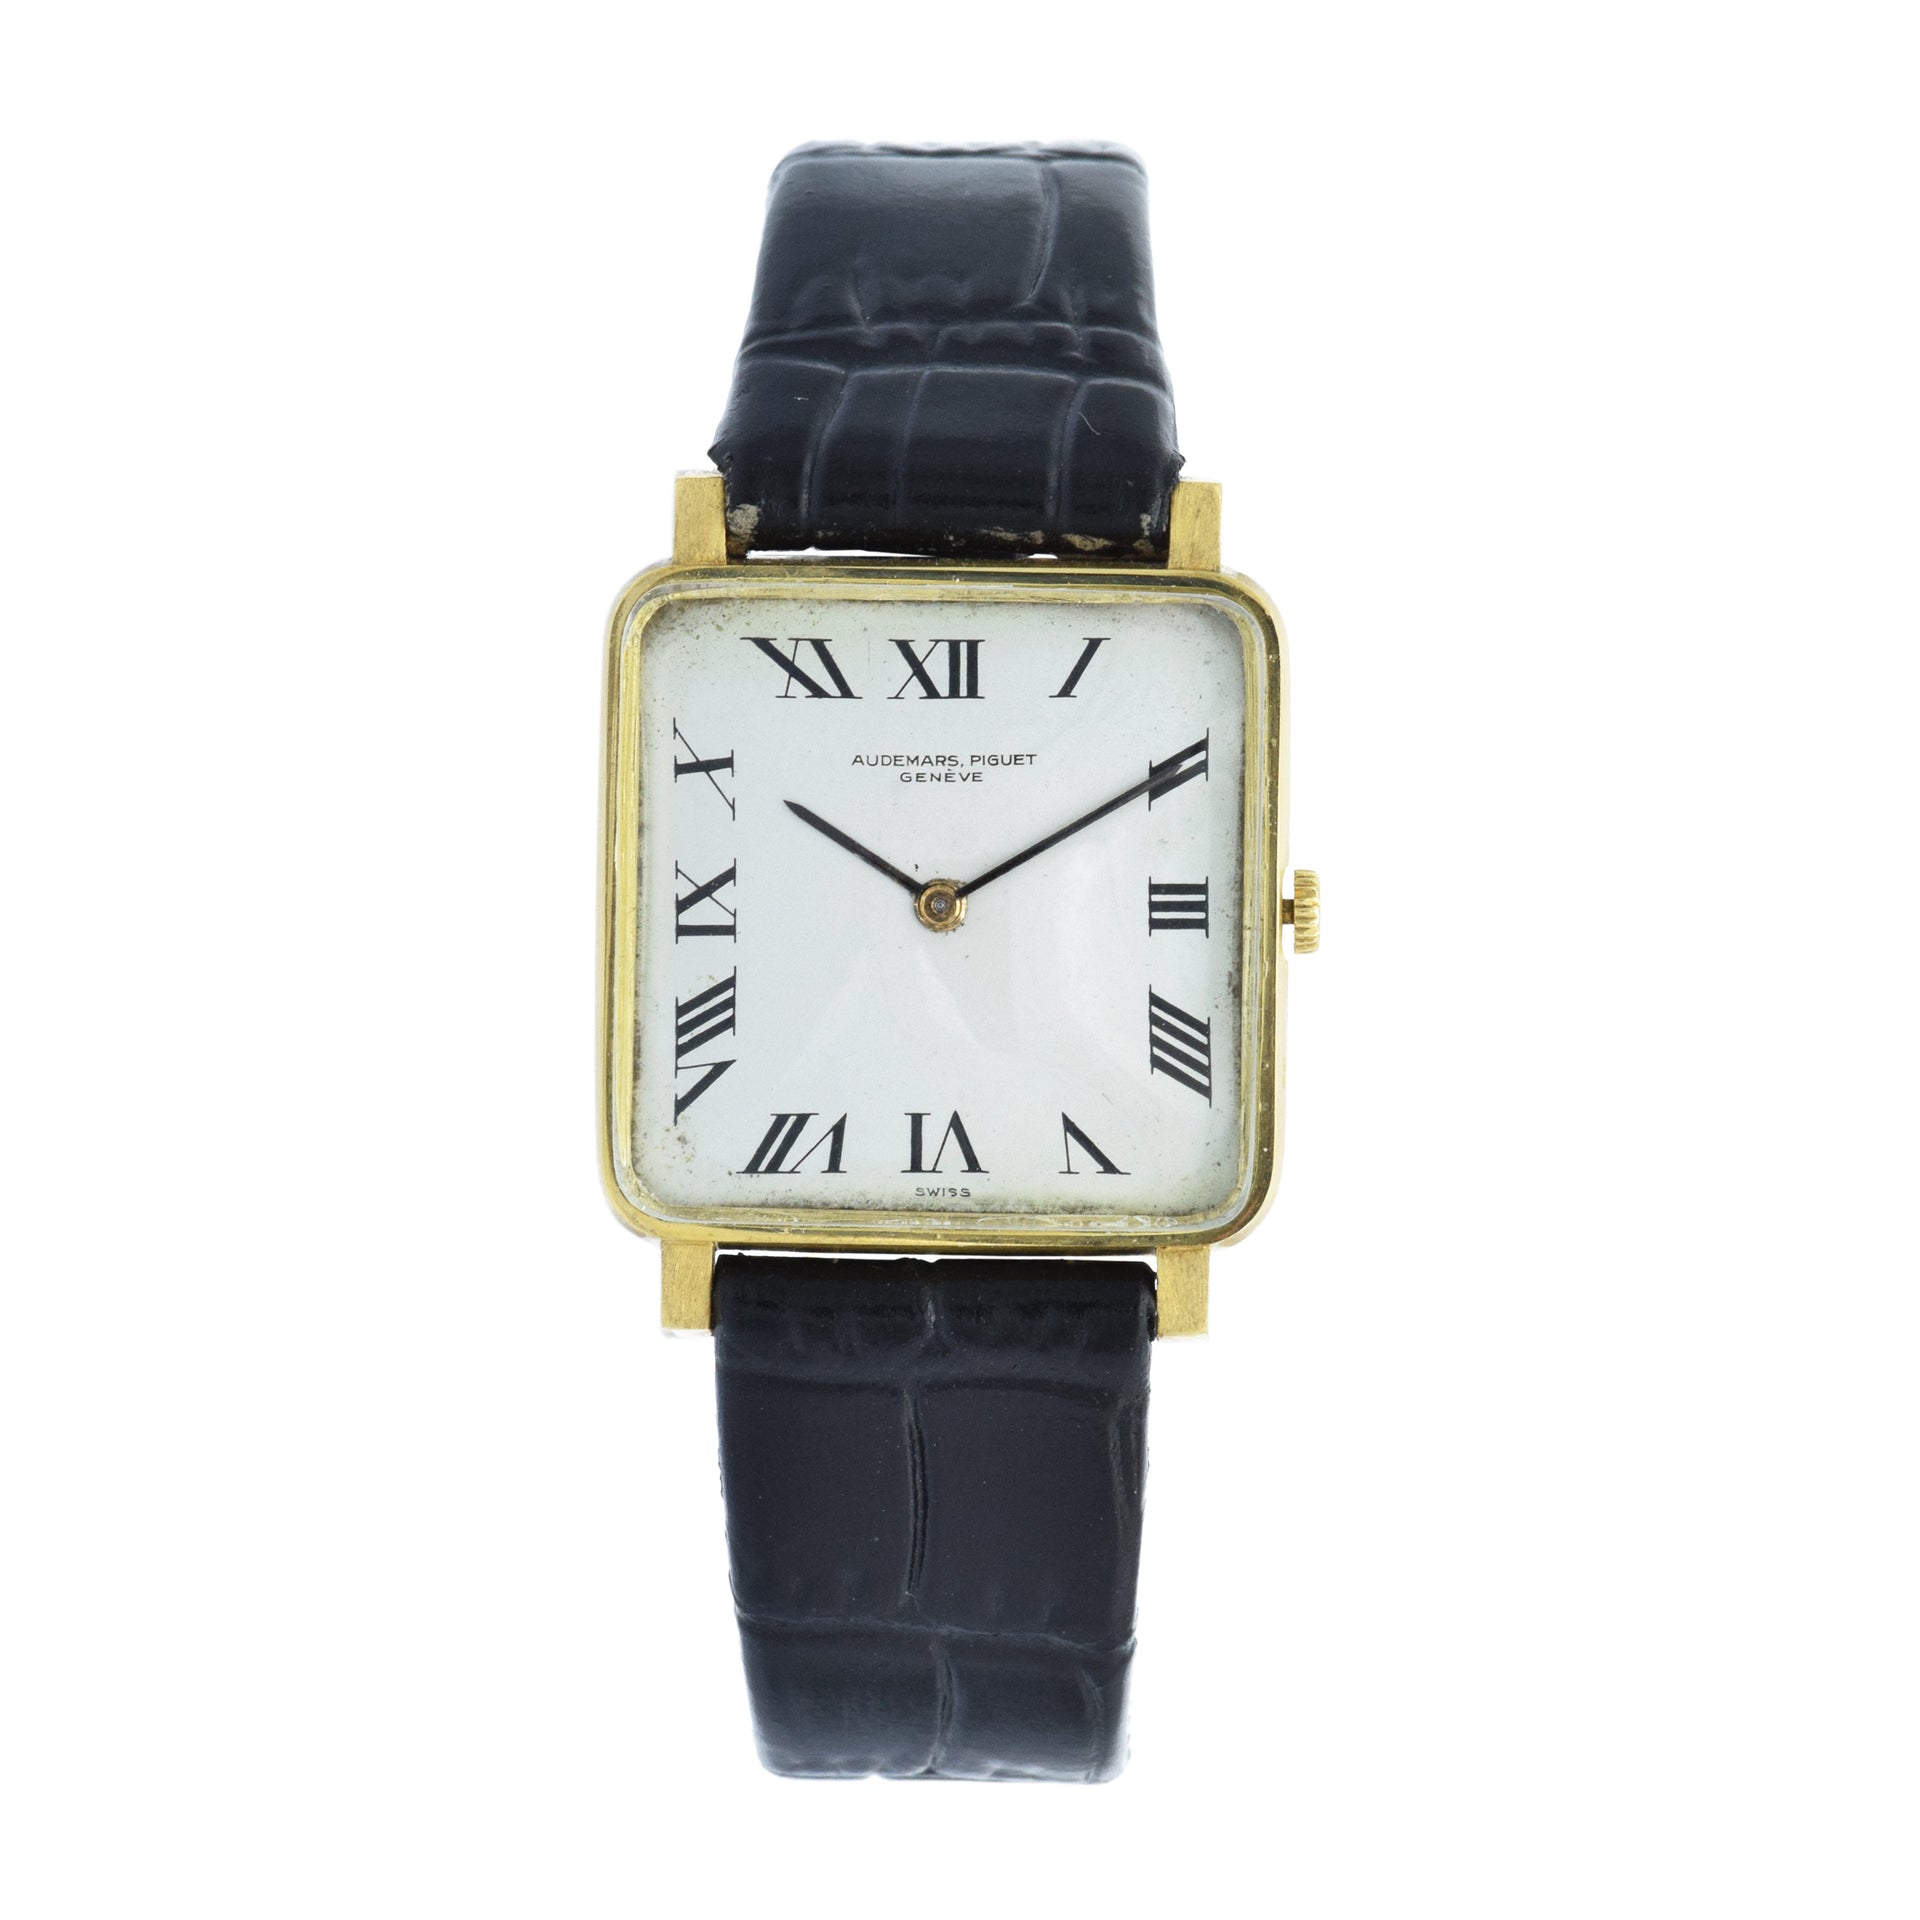 Vintage 1970s Audemars Piguet Watch